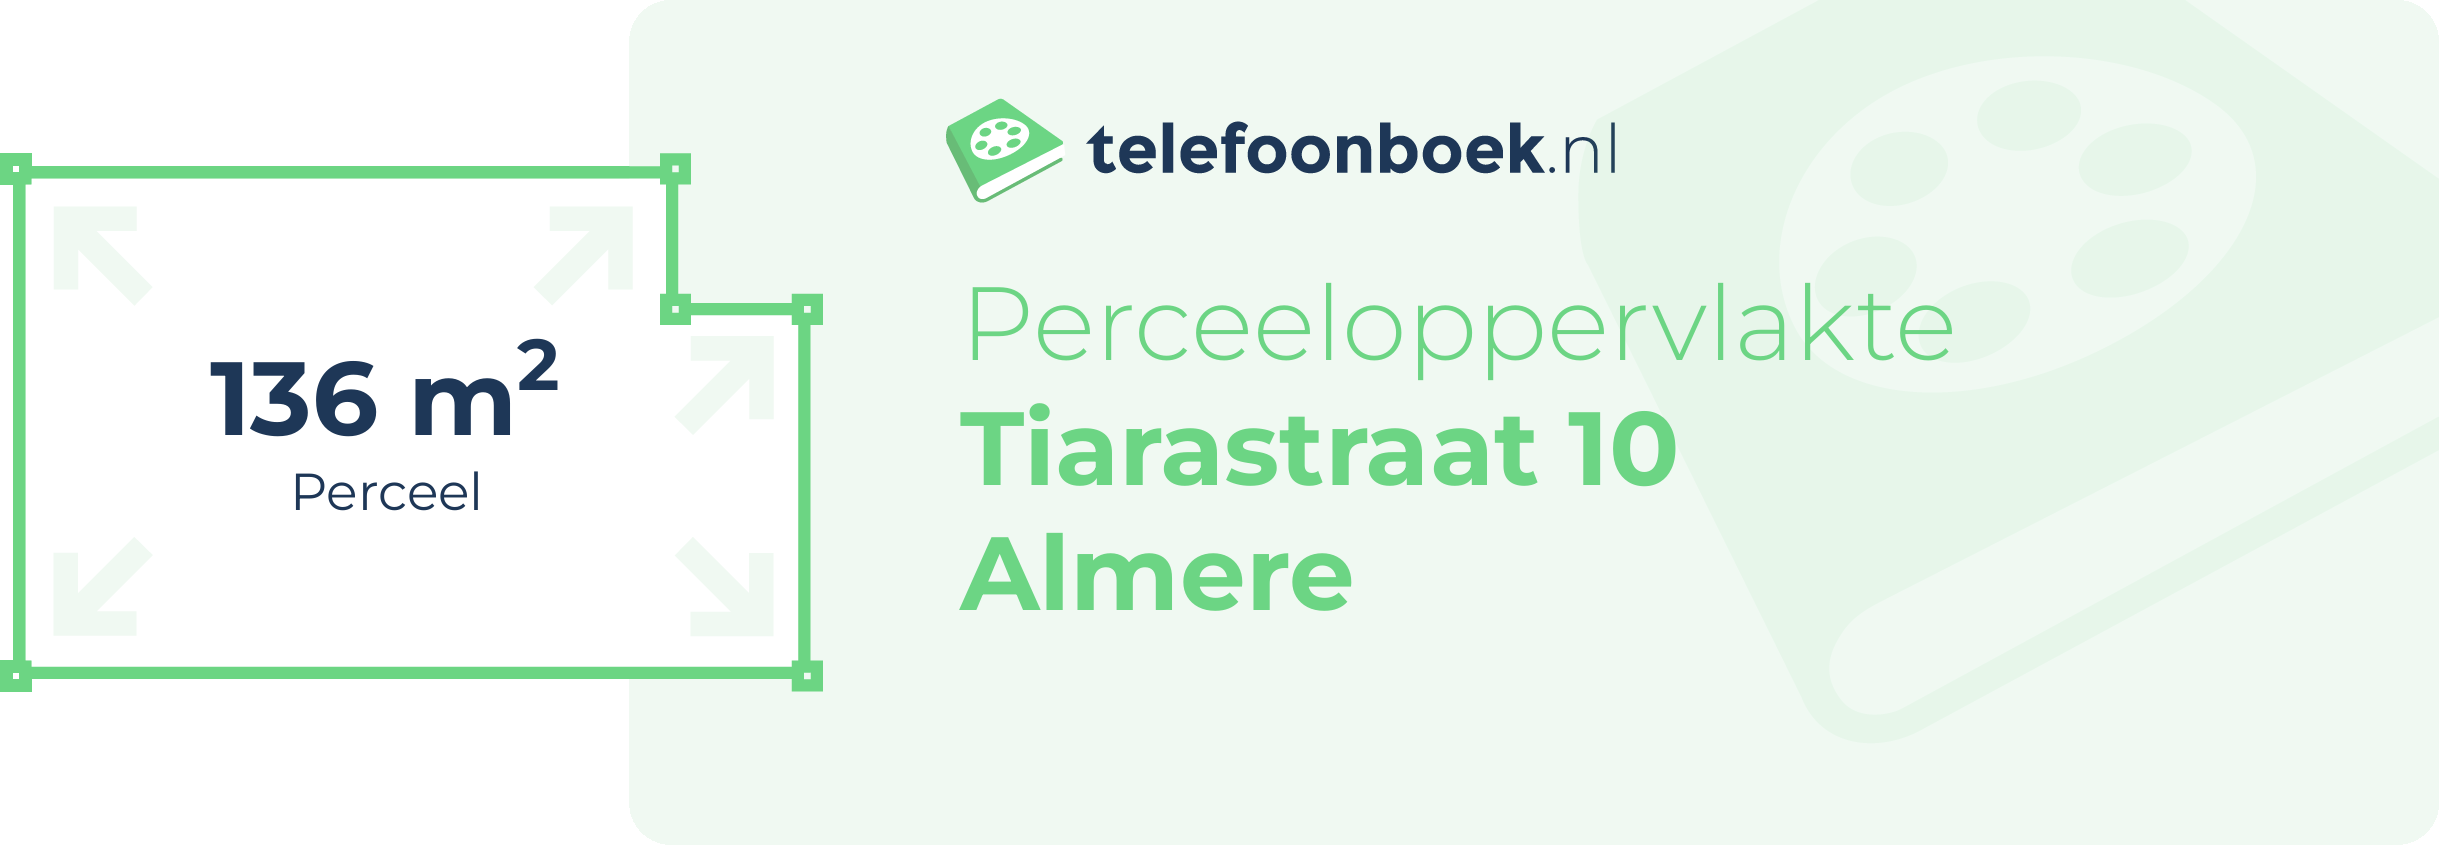 Perceeloppervlakte Tiarastraat 10 Almere